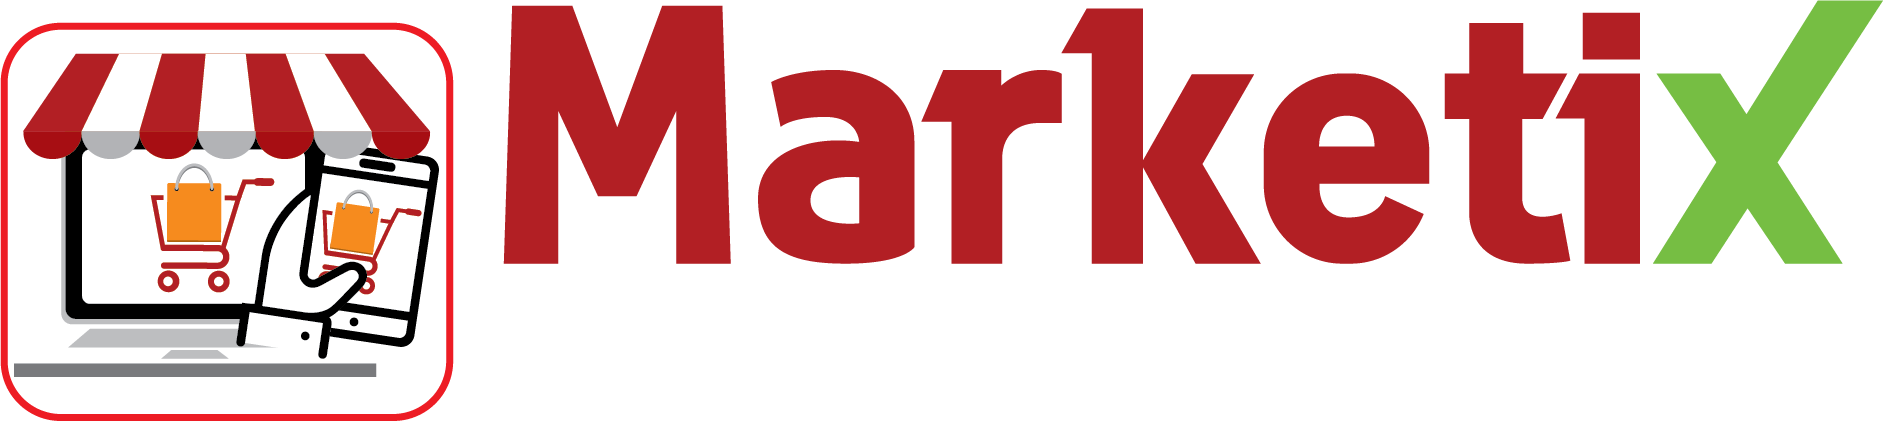 marketix logosu.png (52 KB)